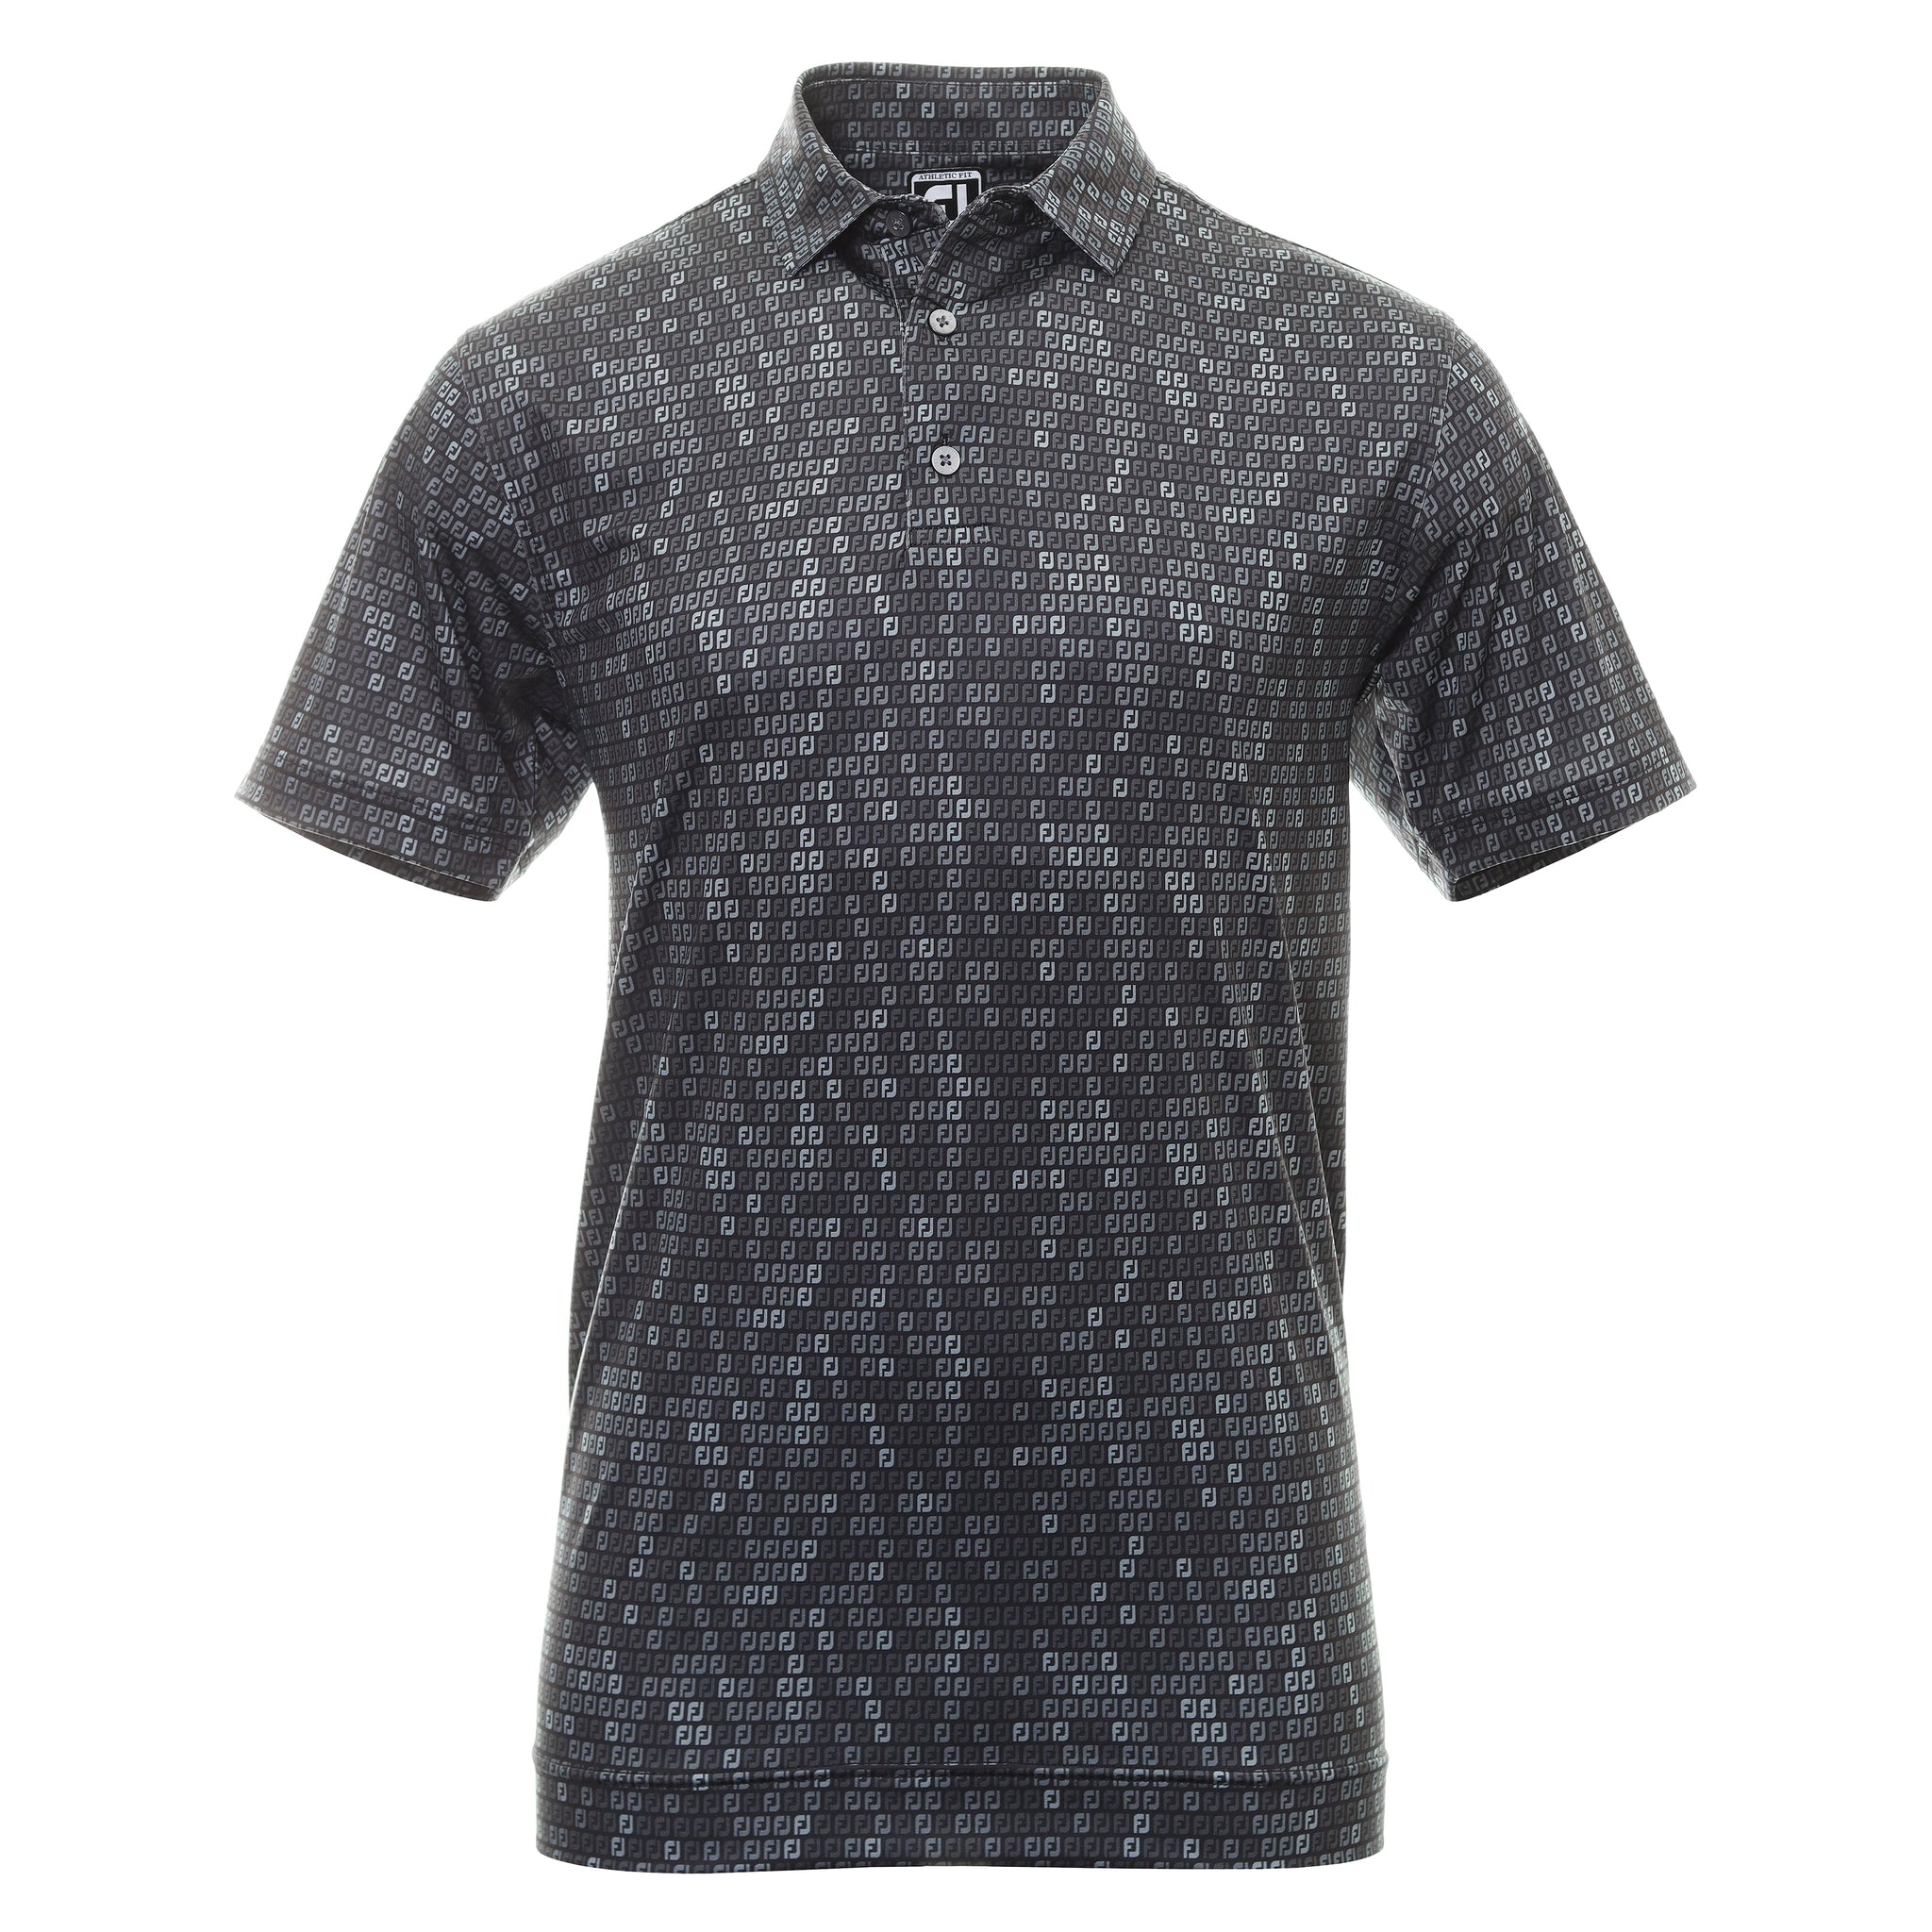 FootJoy Digital Camo FJ Print Golf Shirt 88437 Black | Function18 ...